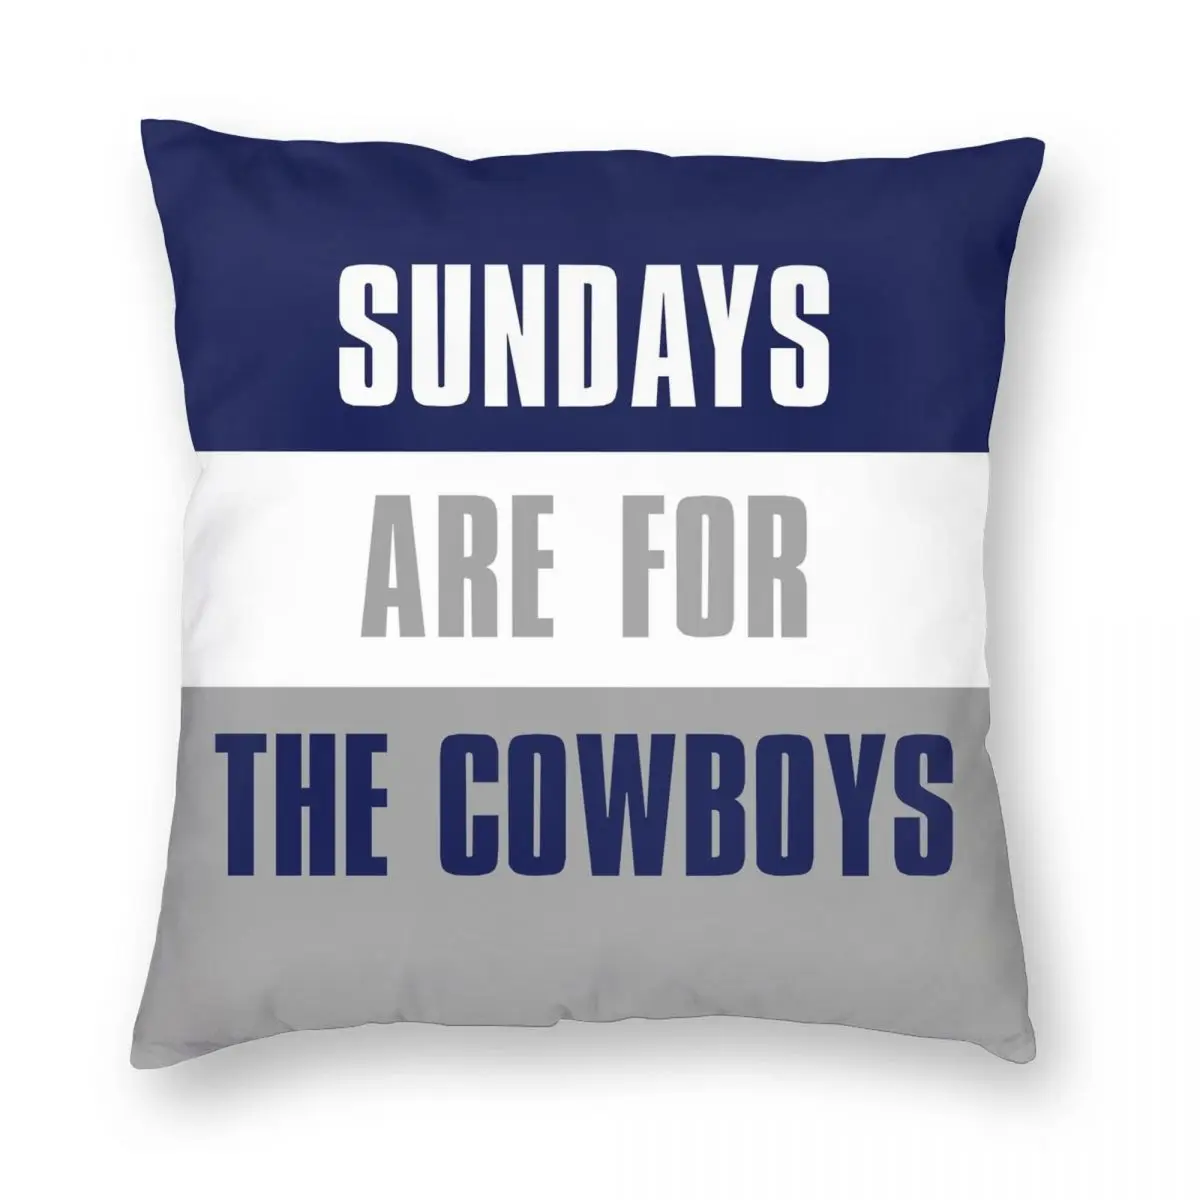 

Sundays Are For The Cowboys Square Pillowcase Polyester Linen Velvet Printed Zip Decor Pillow Case Car Cushion Cover